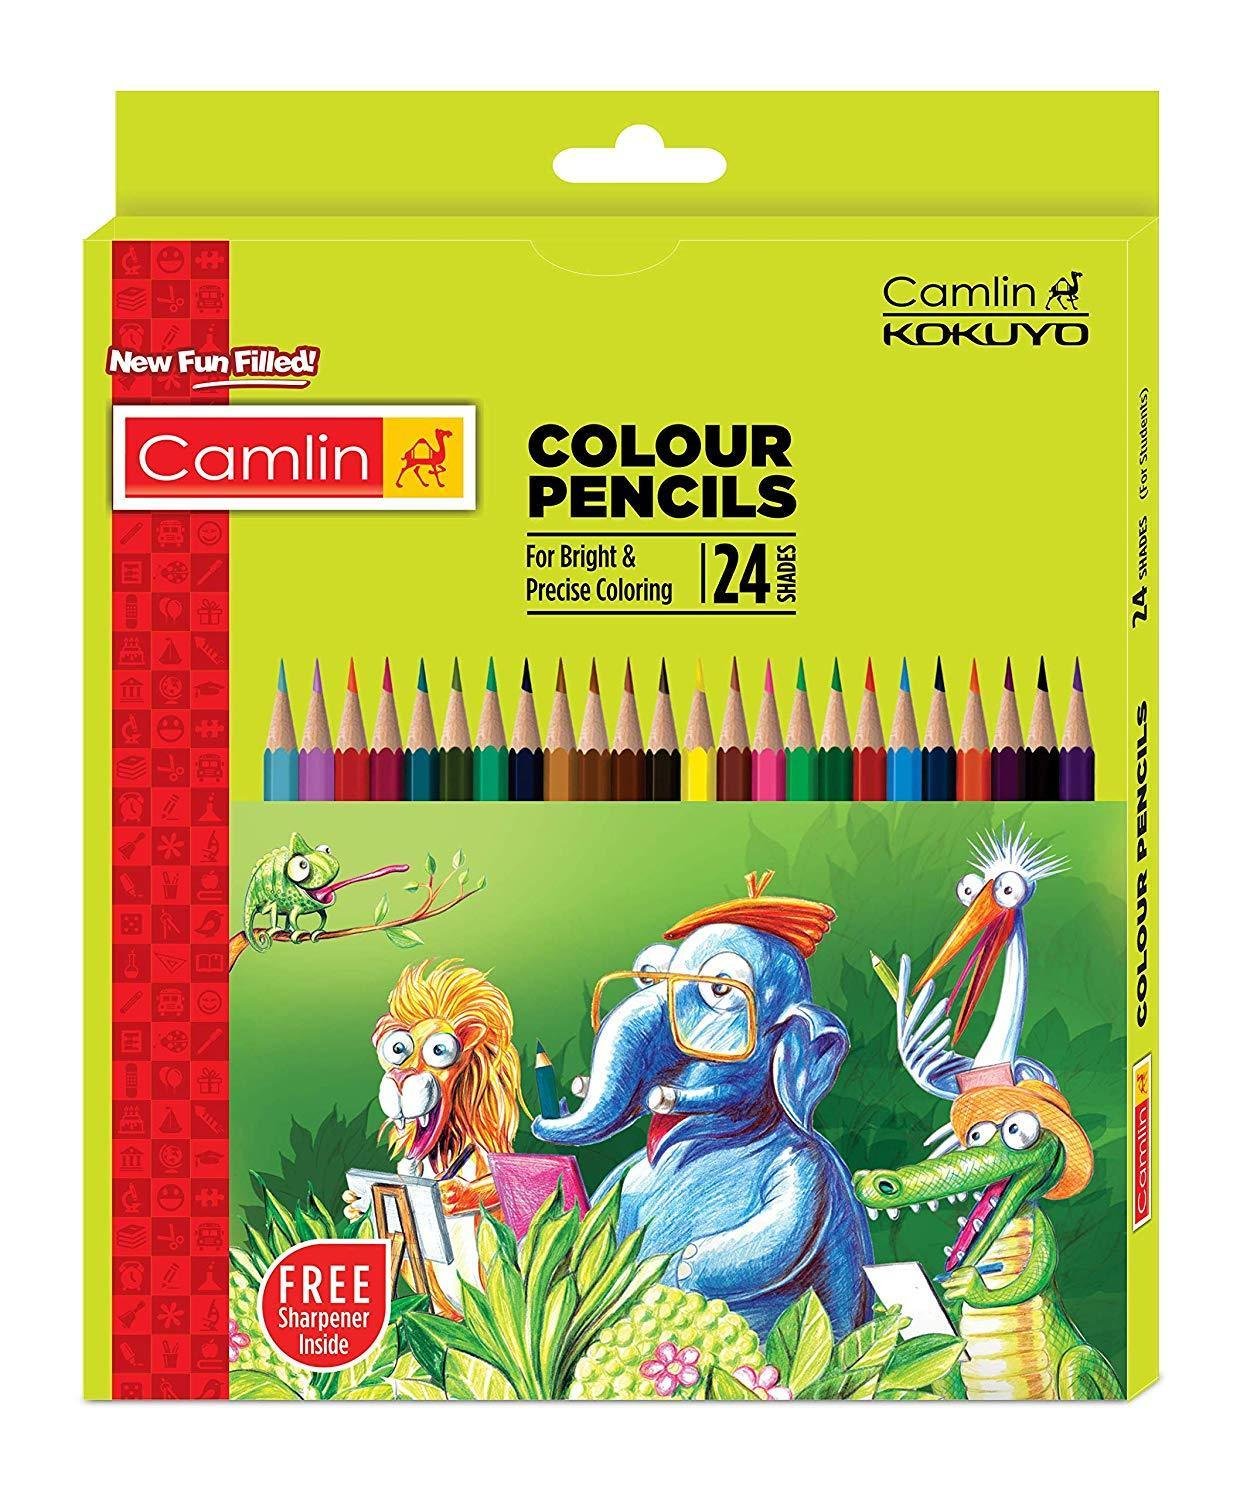 Camlin Kokuyo 24 Shade Full Size Colour Pencil Set (Assorted)